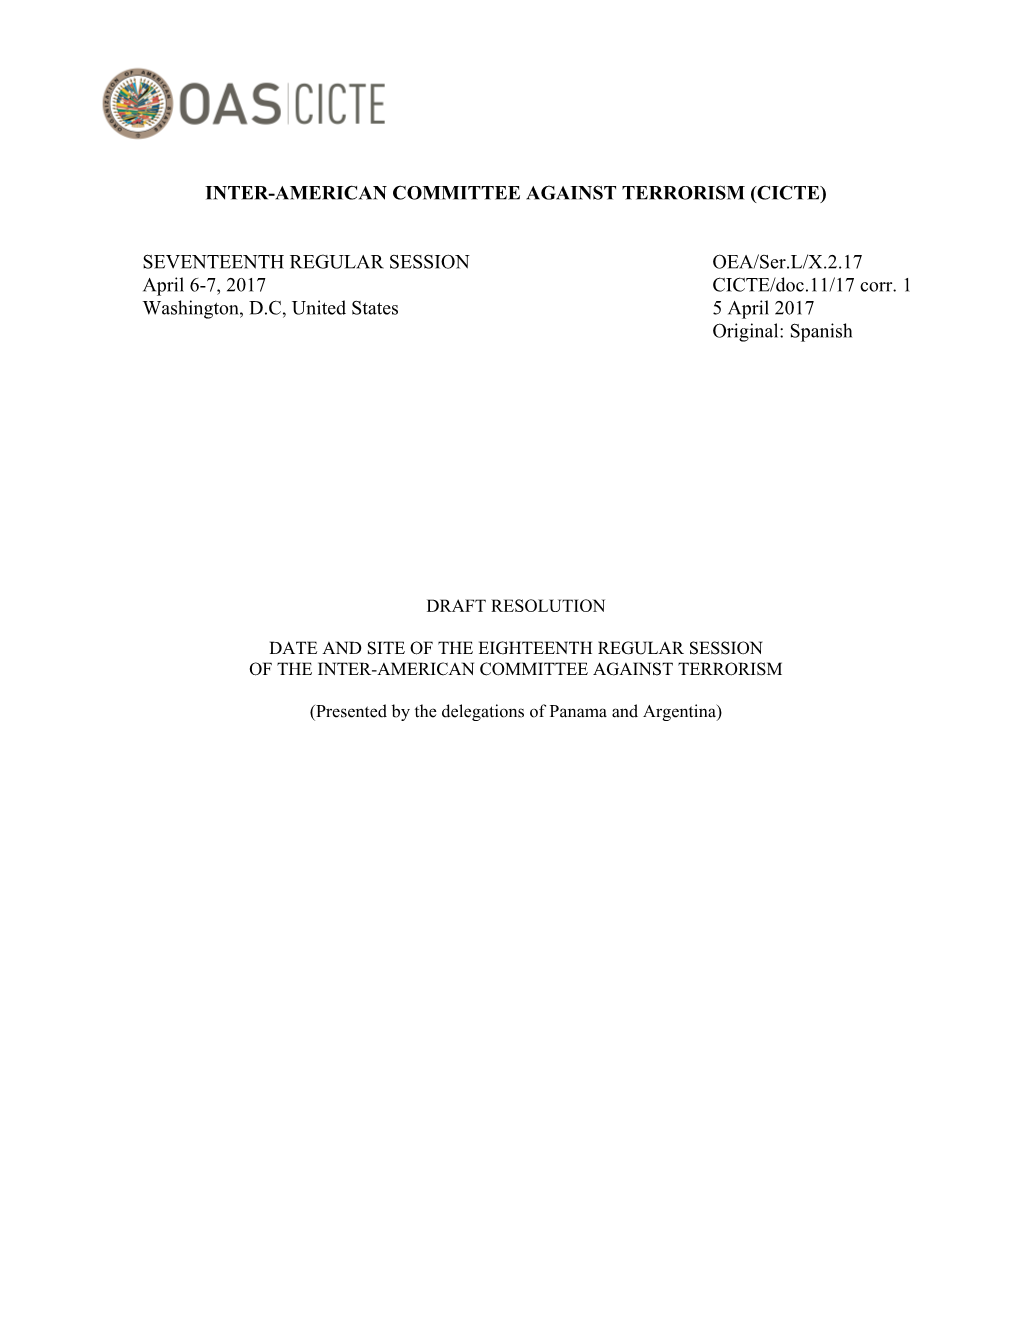 Inter-American Committee Against Terrorism (Cicte)